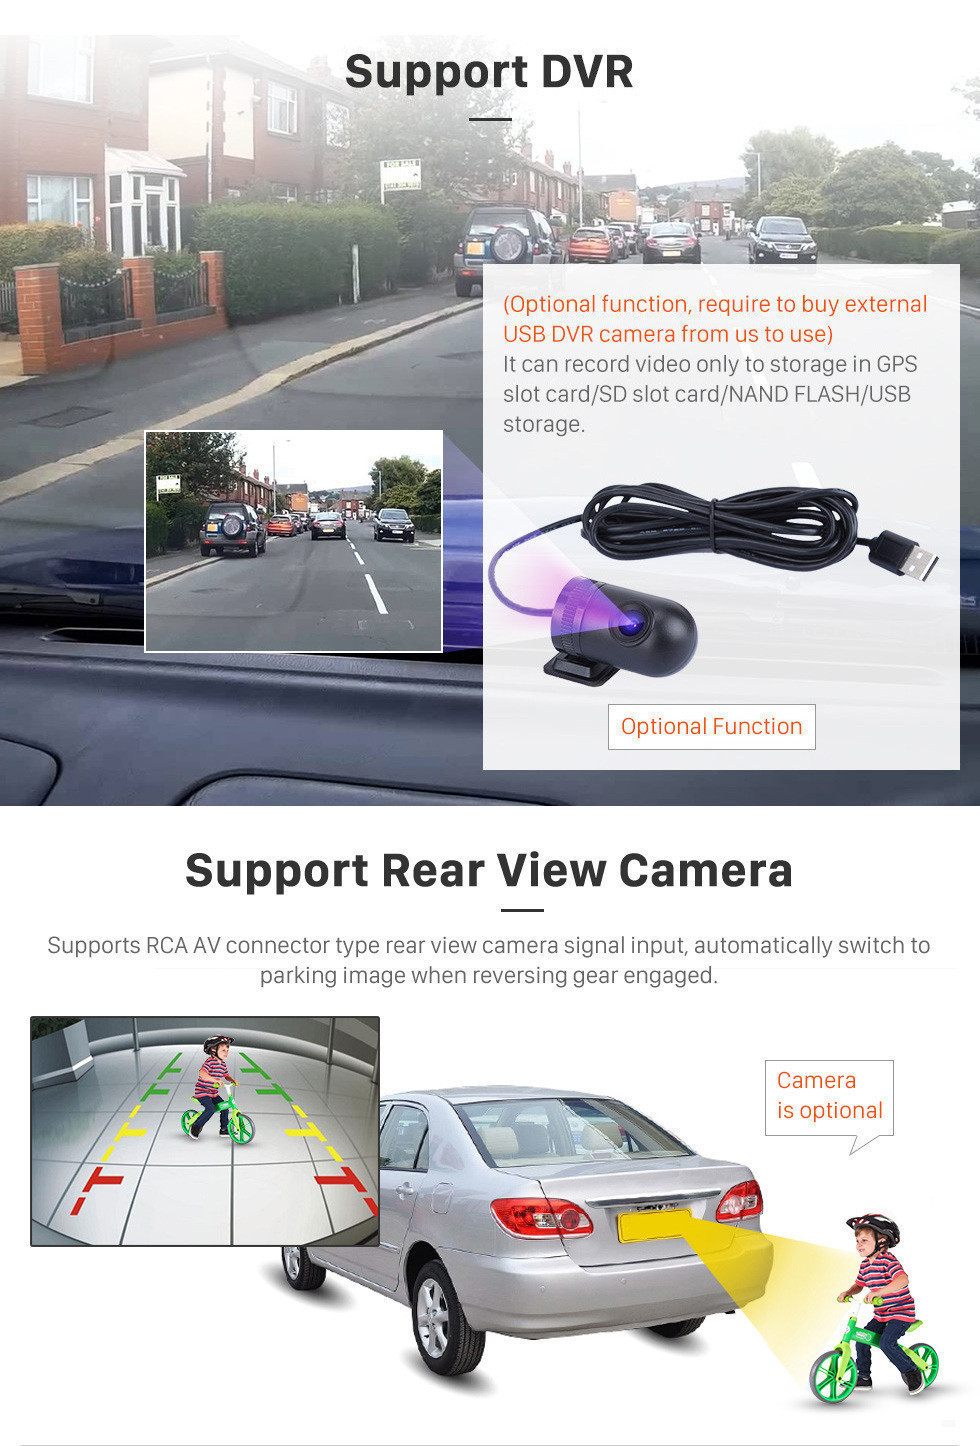 Seicane 10.1 inch 2012-2016 Nissan Slyphy Android 11.0 GPS Navigation System Autoradio MP3 4G WiFi USB 1080P Video Auto A/V Backup Camera Mirror Link 